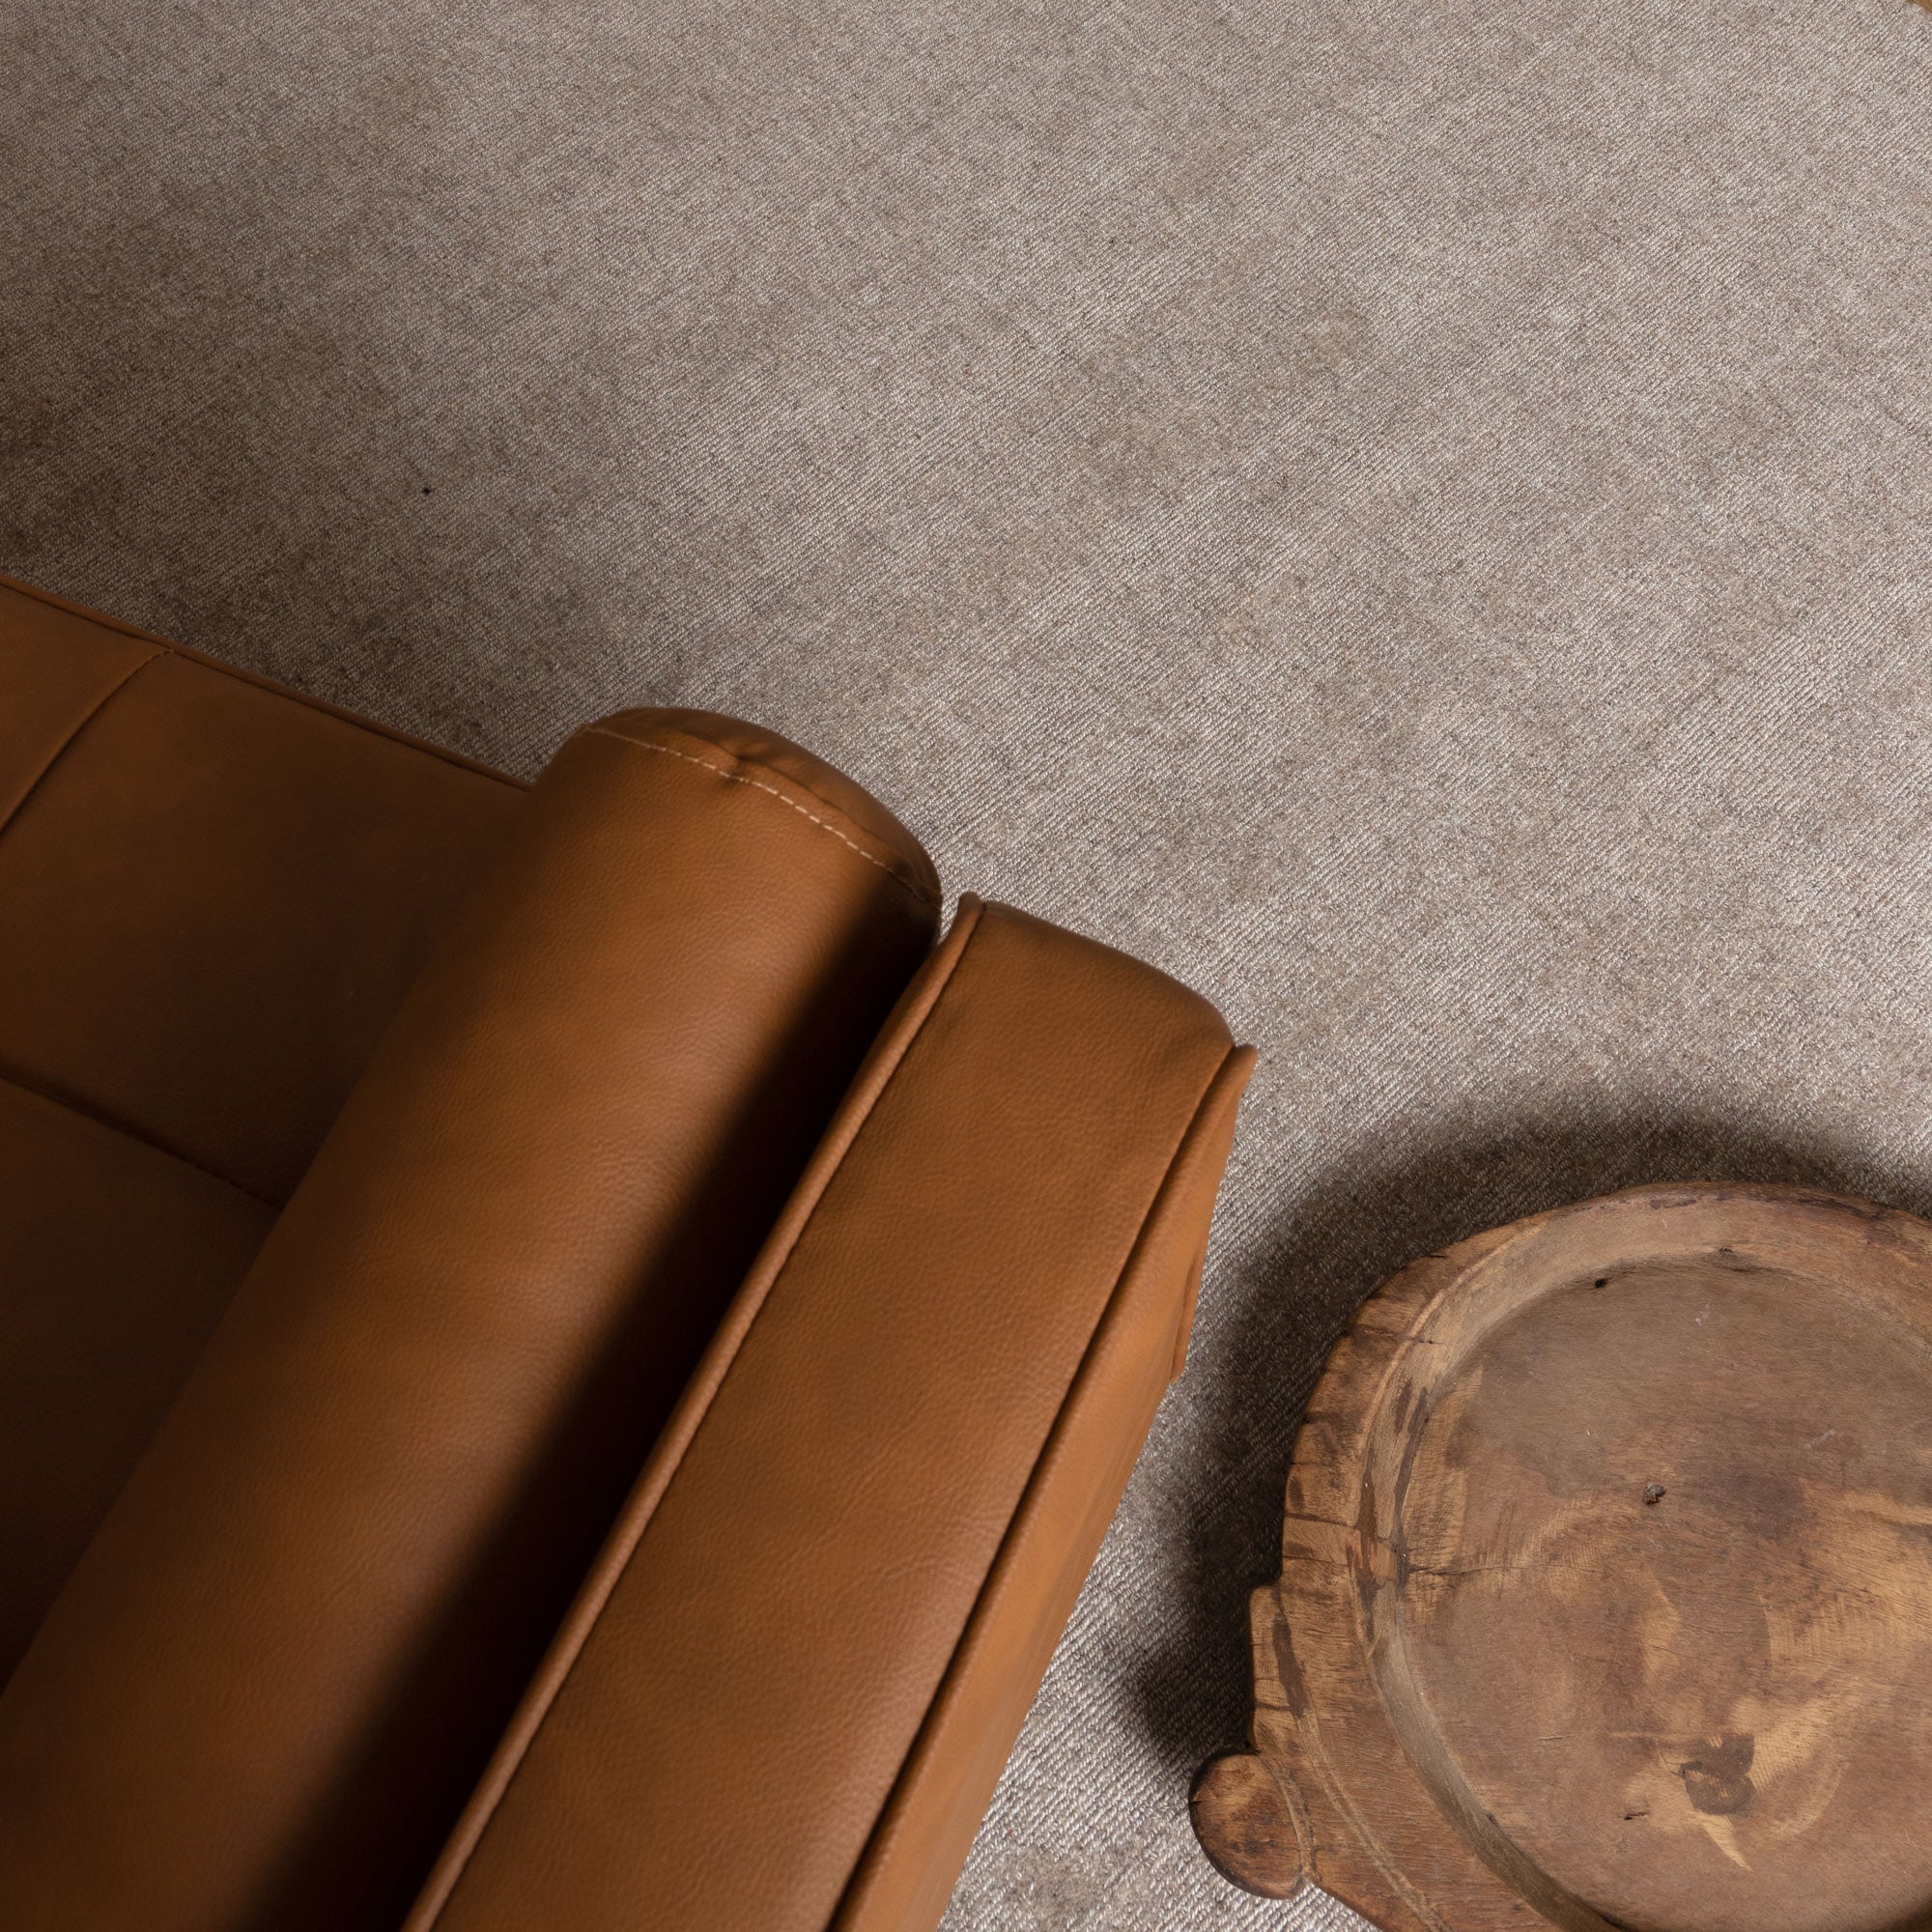 Arizona Camel Wool Rug with tan leather sofa